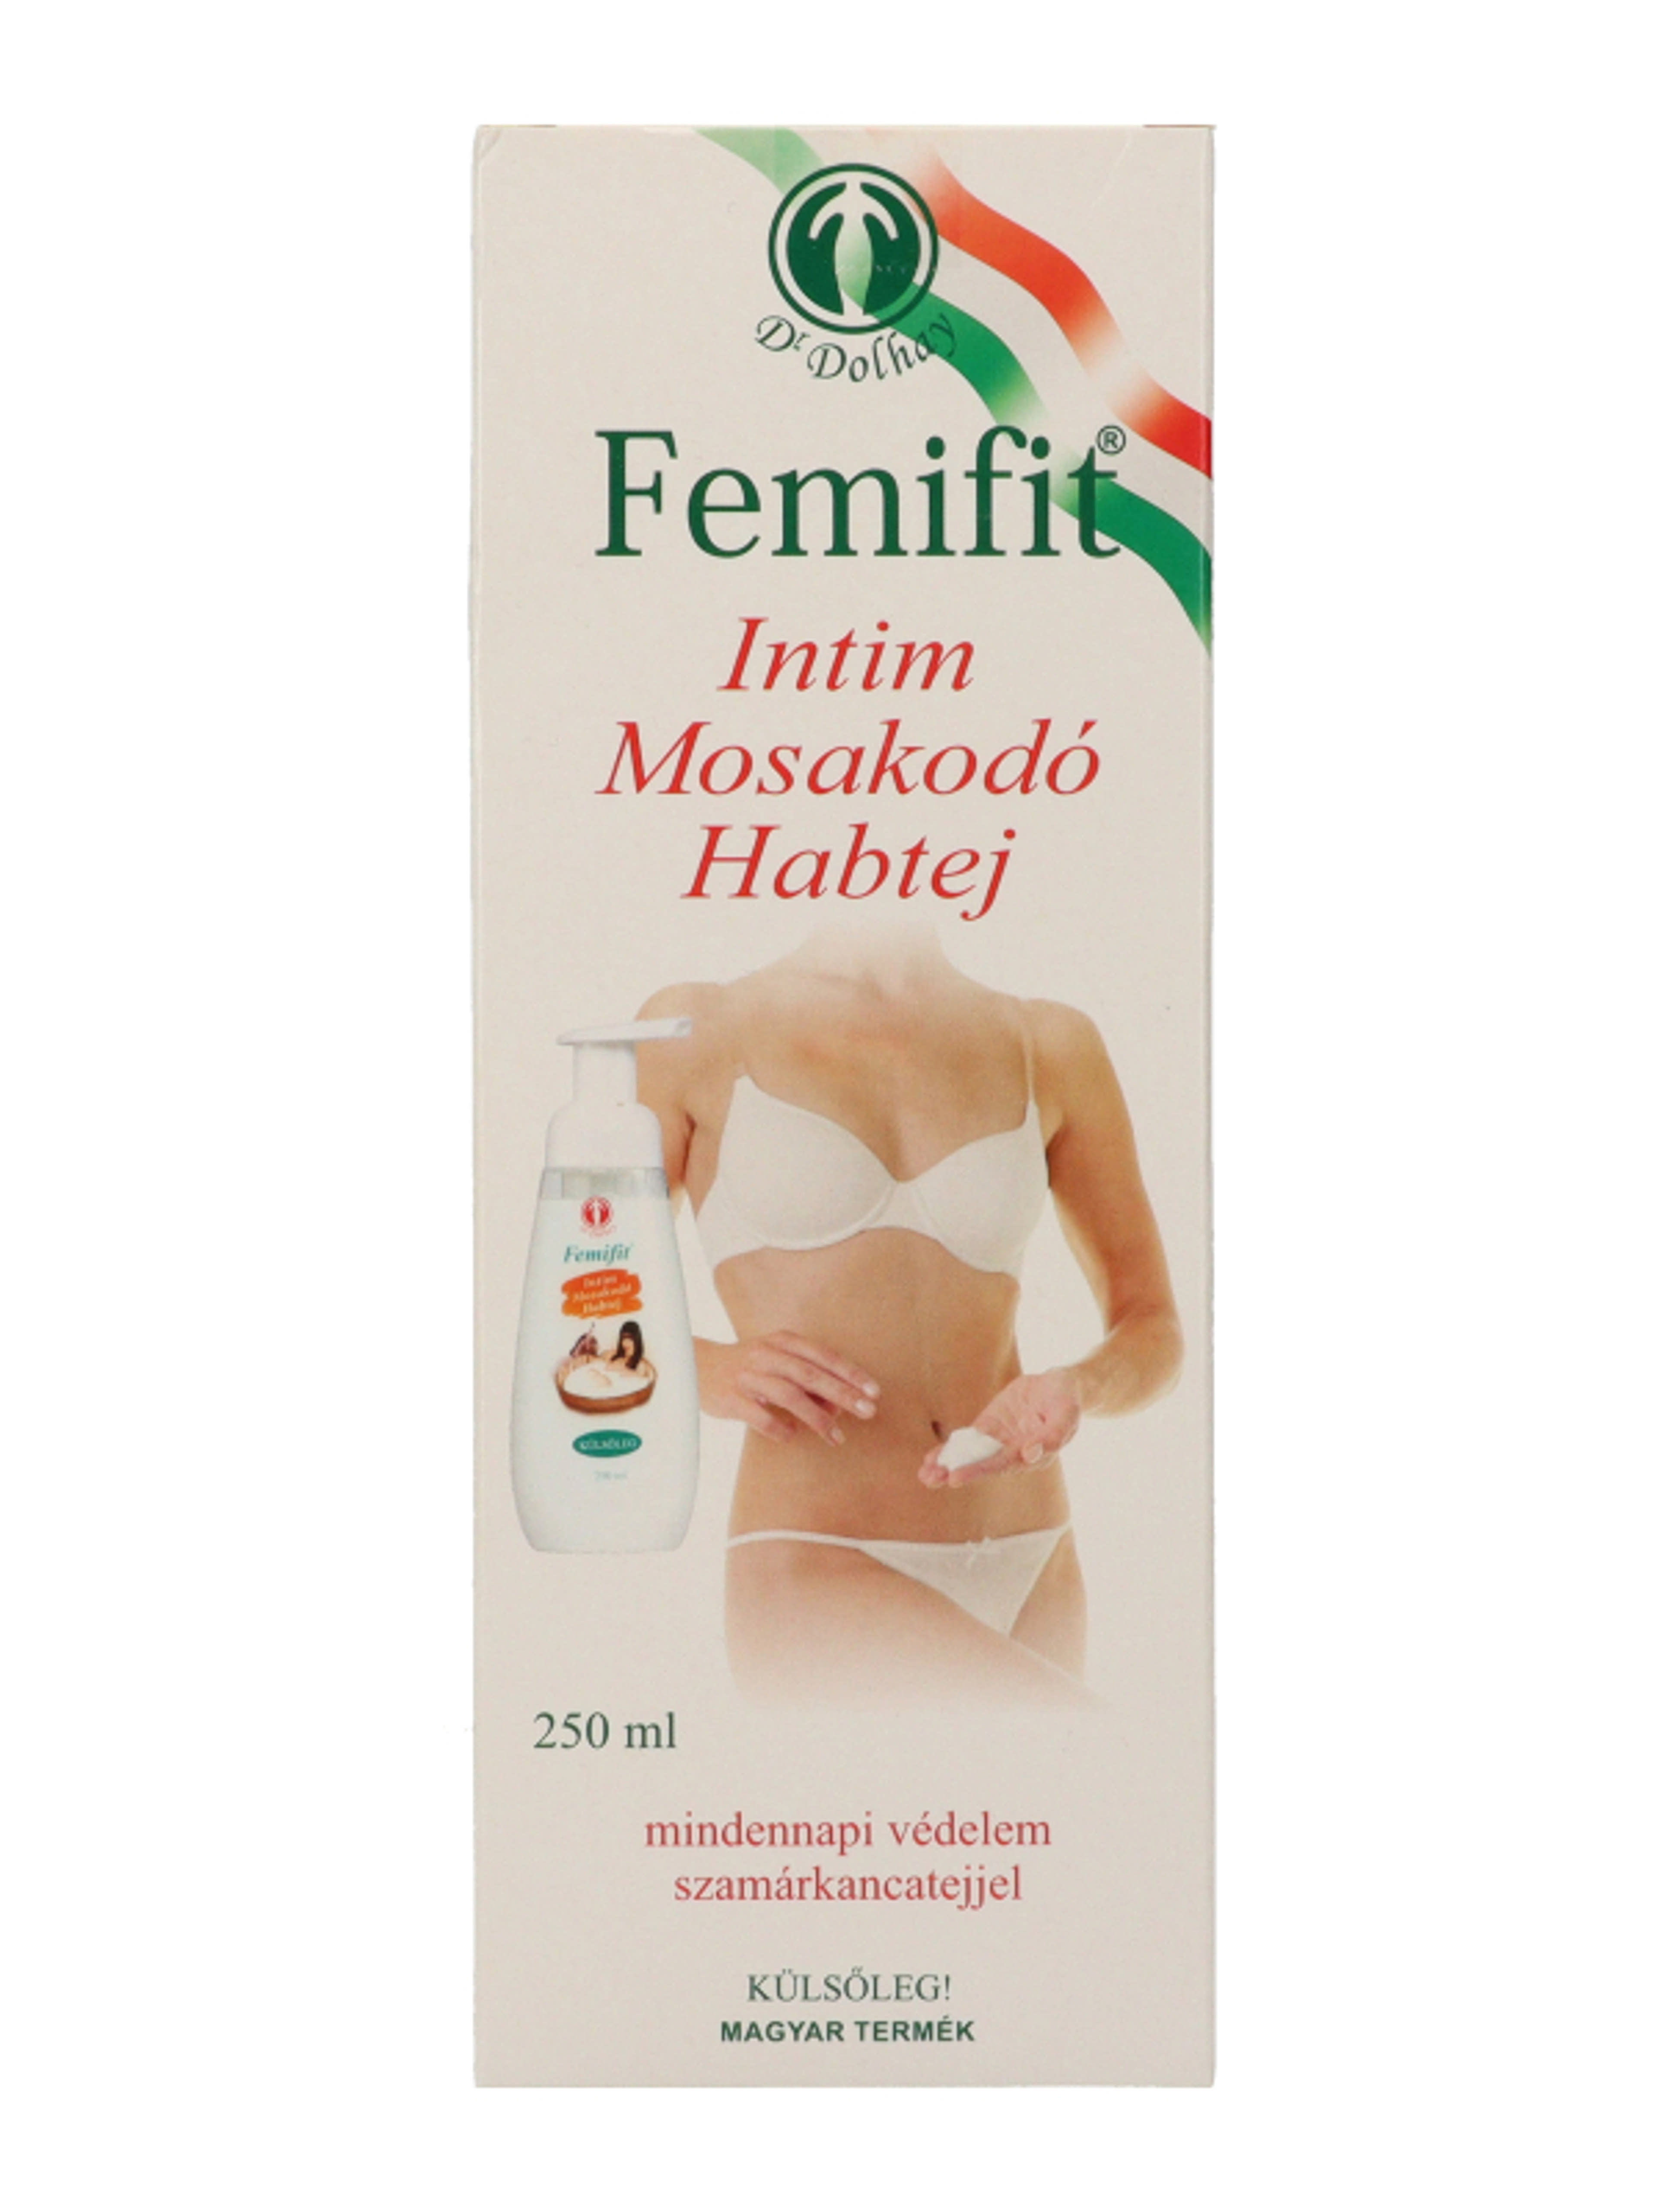 Femifit intim mosakodó habtej - 250 ml-2